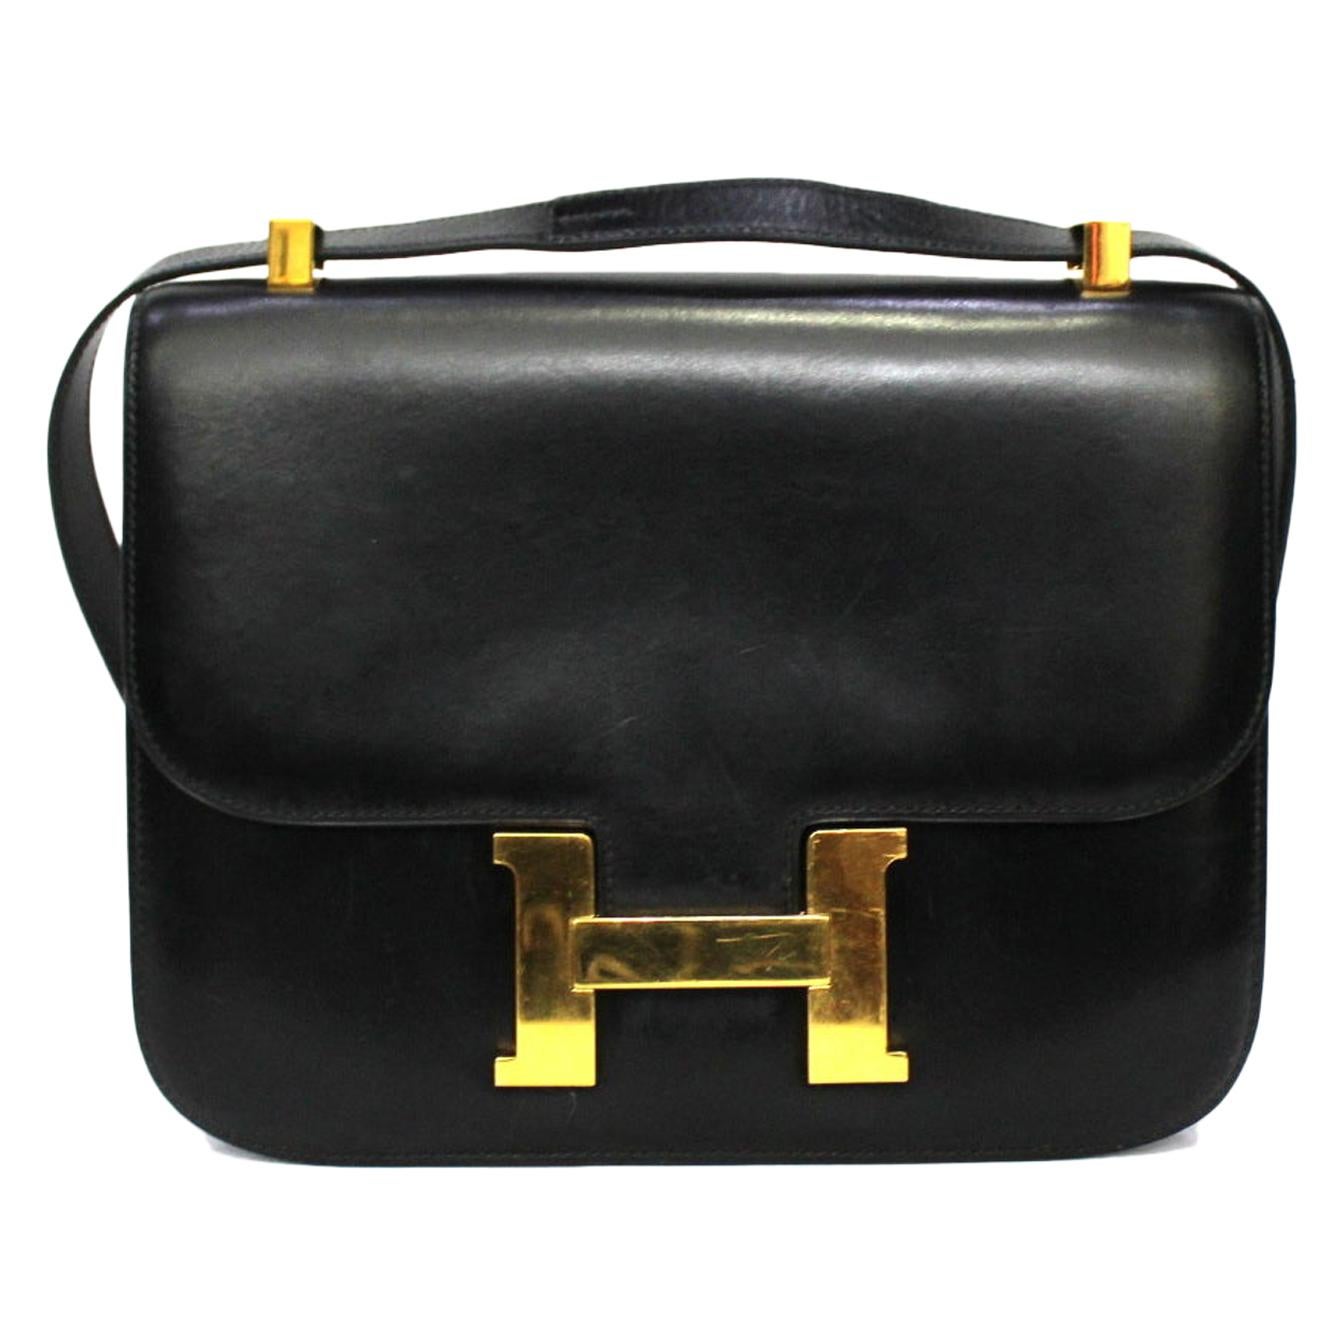 1996 Hermès Black Leather Constance Bag